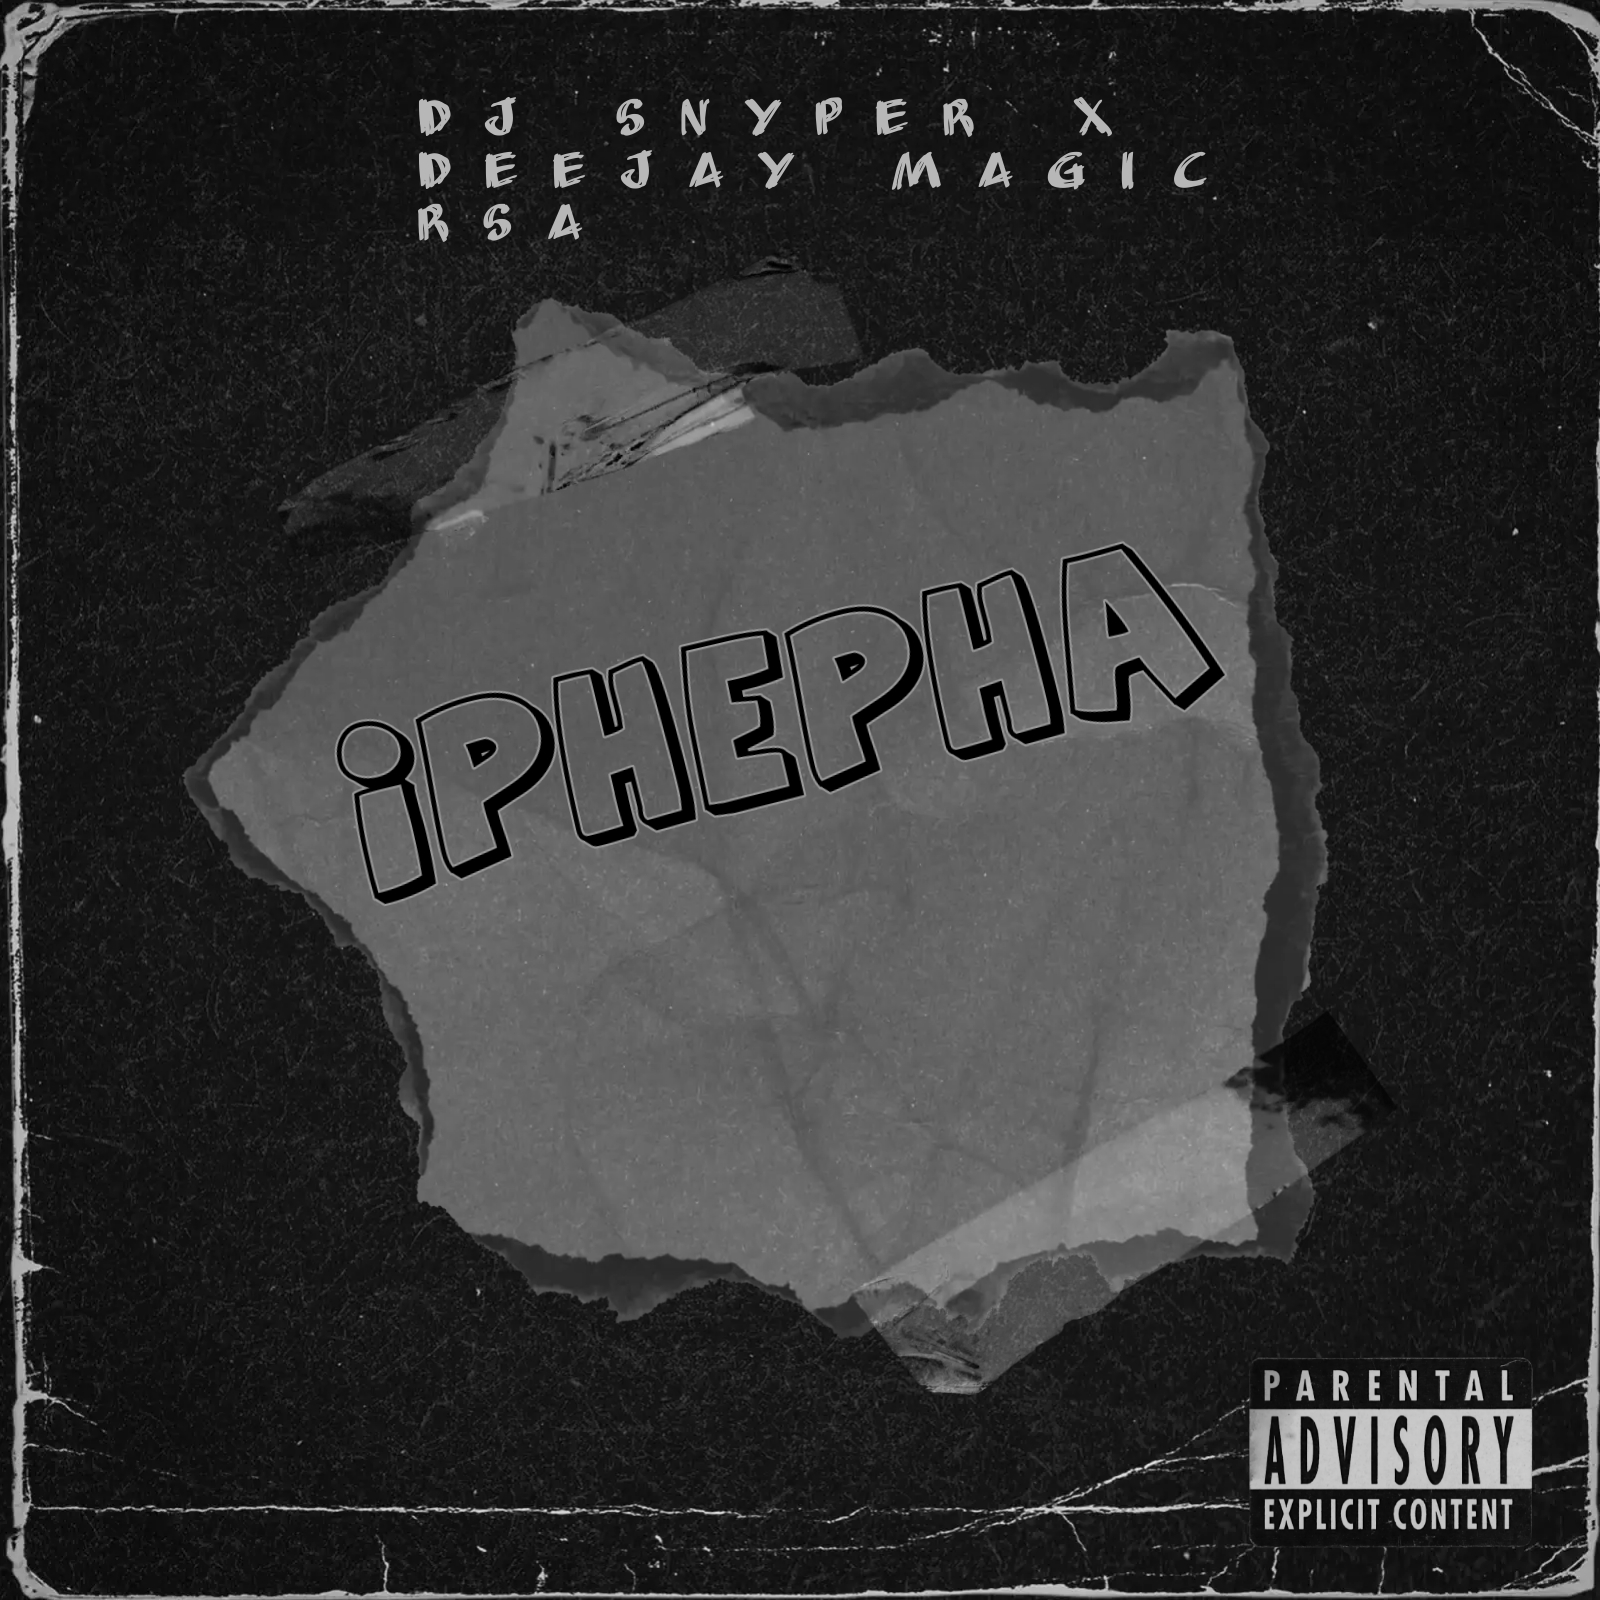 Iphepha - DeeJay Magic RSa & Dj Snyper